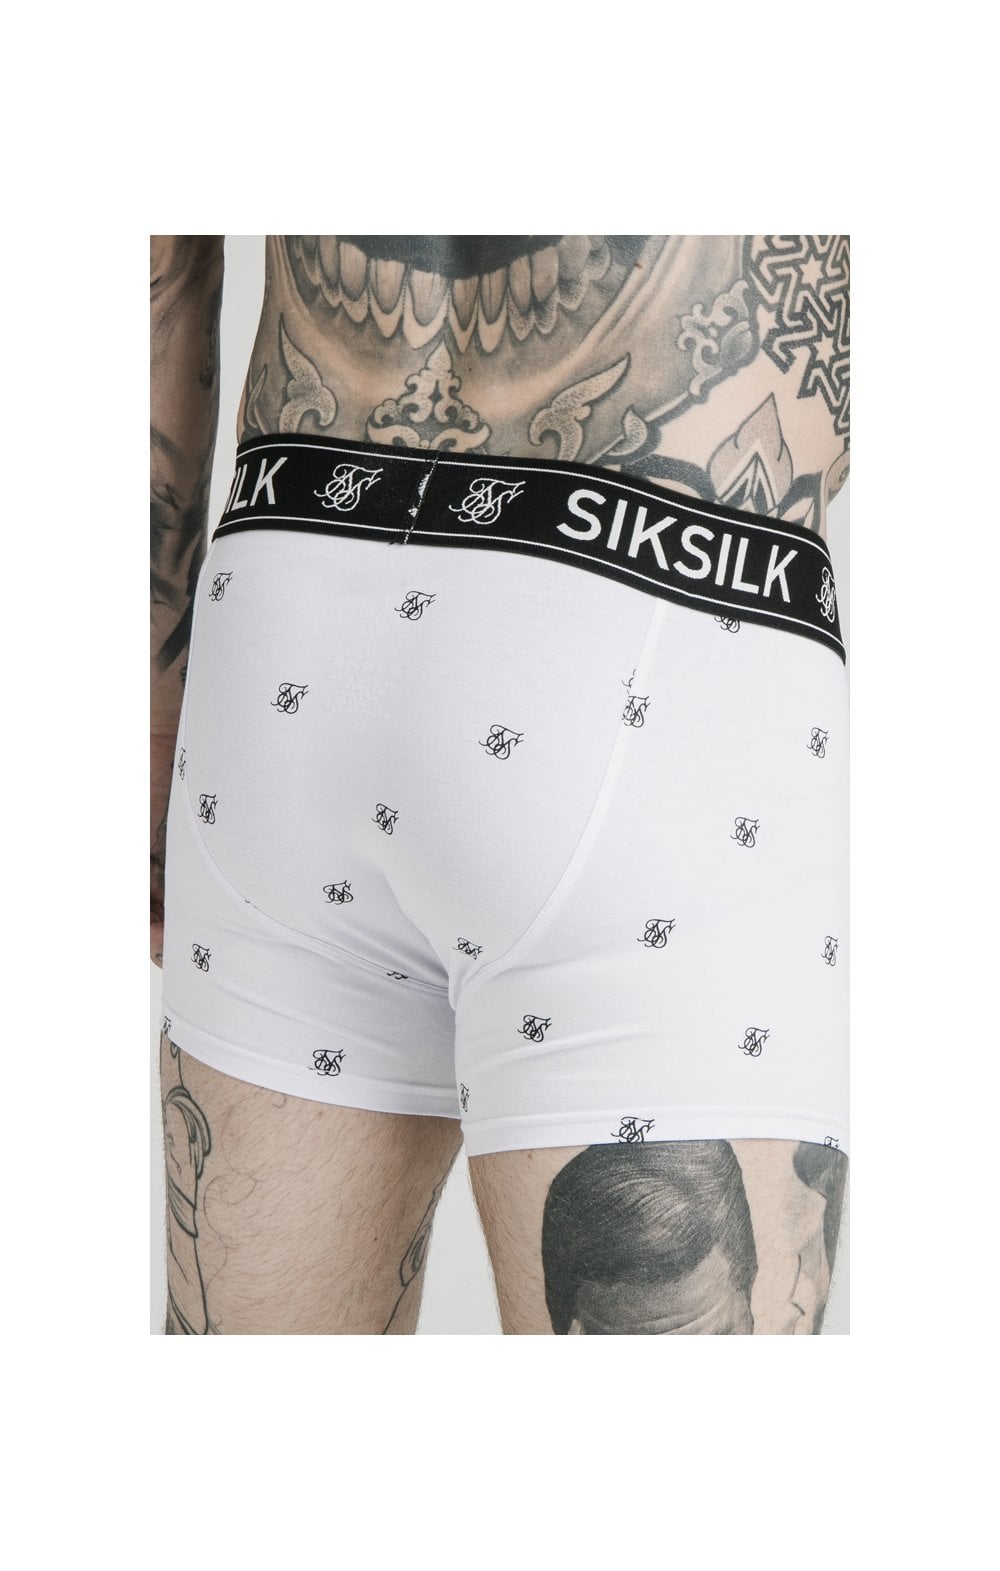 SikSilk Logo Taped Boxer Shorts (2 Pack) - White &amp; Black Pack of 2 Boxers - 1 White pair and 1 Black pair (4)